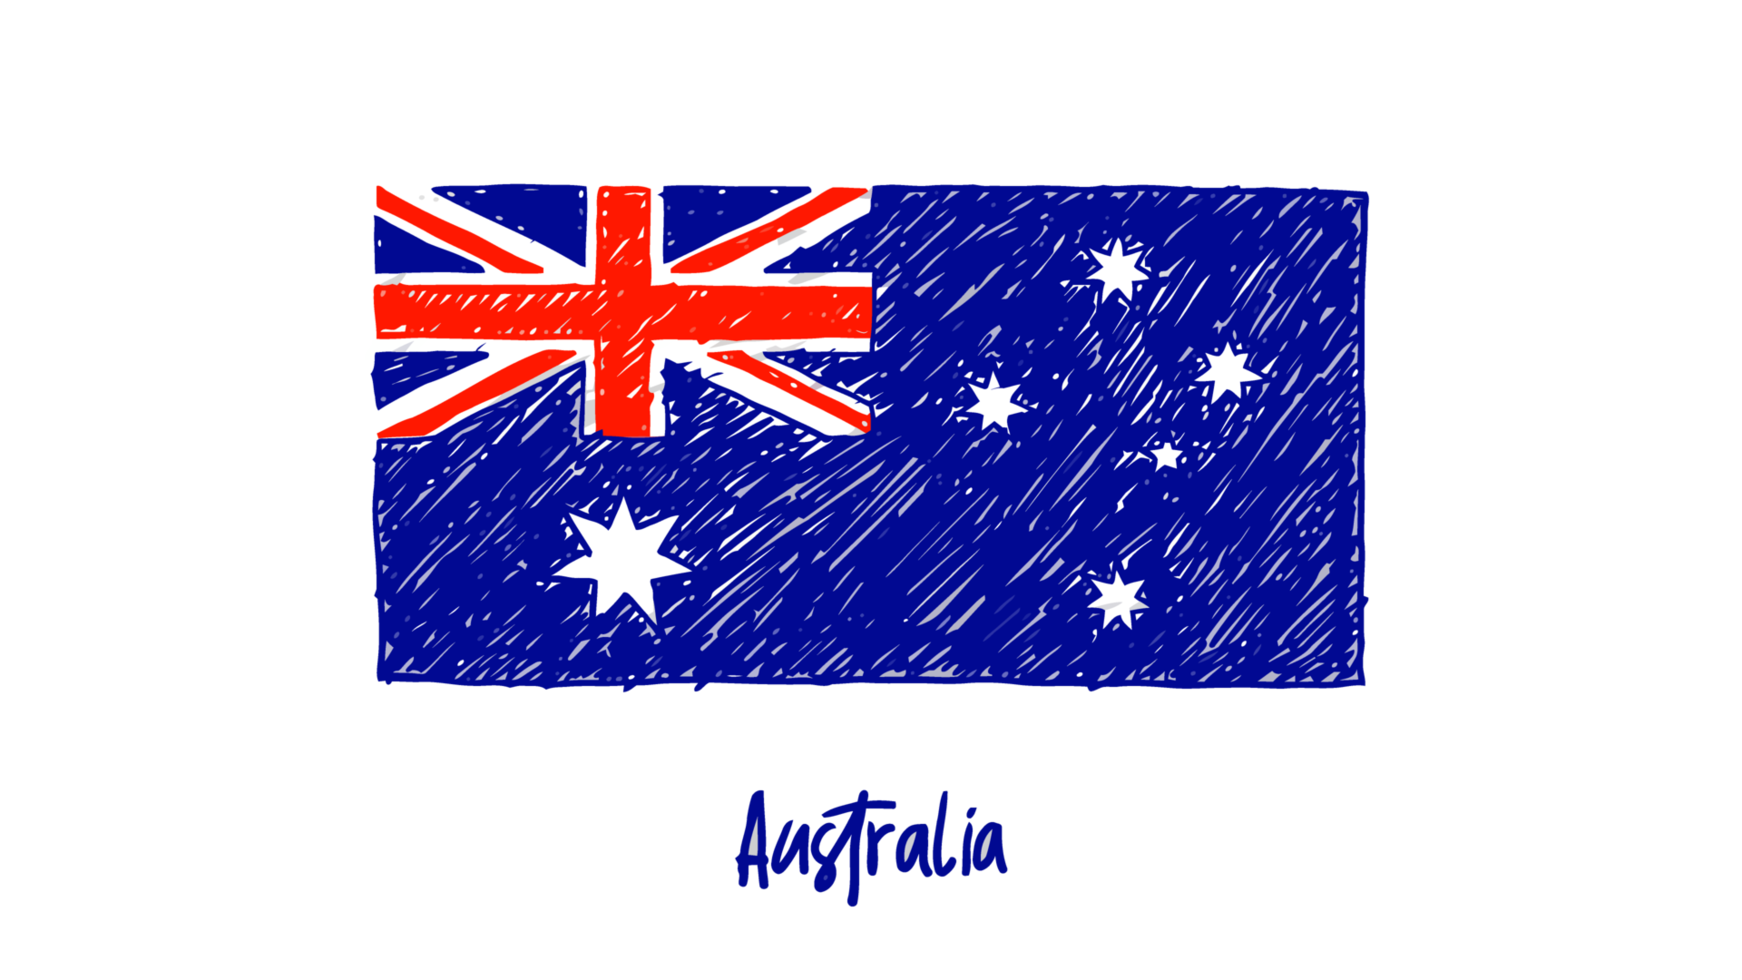 Australia National Country Flag Pencil Color Sketch Illustration png